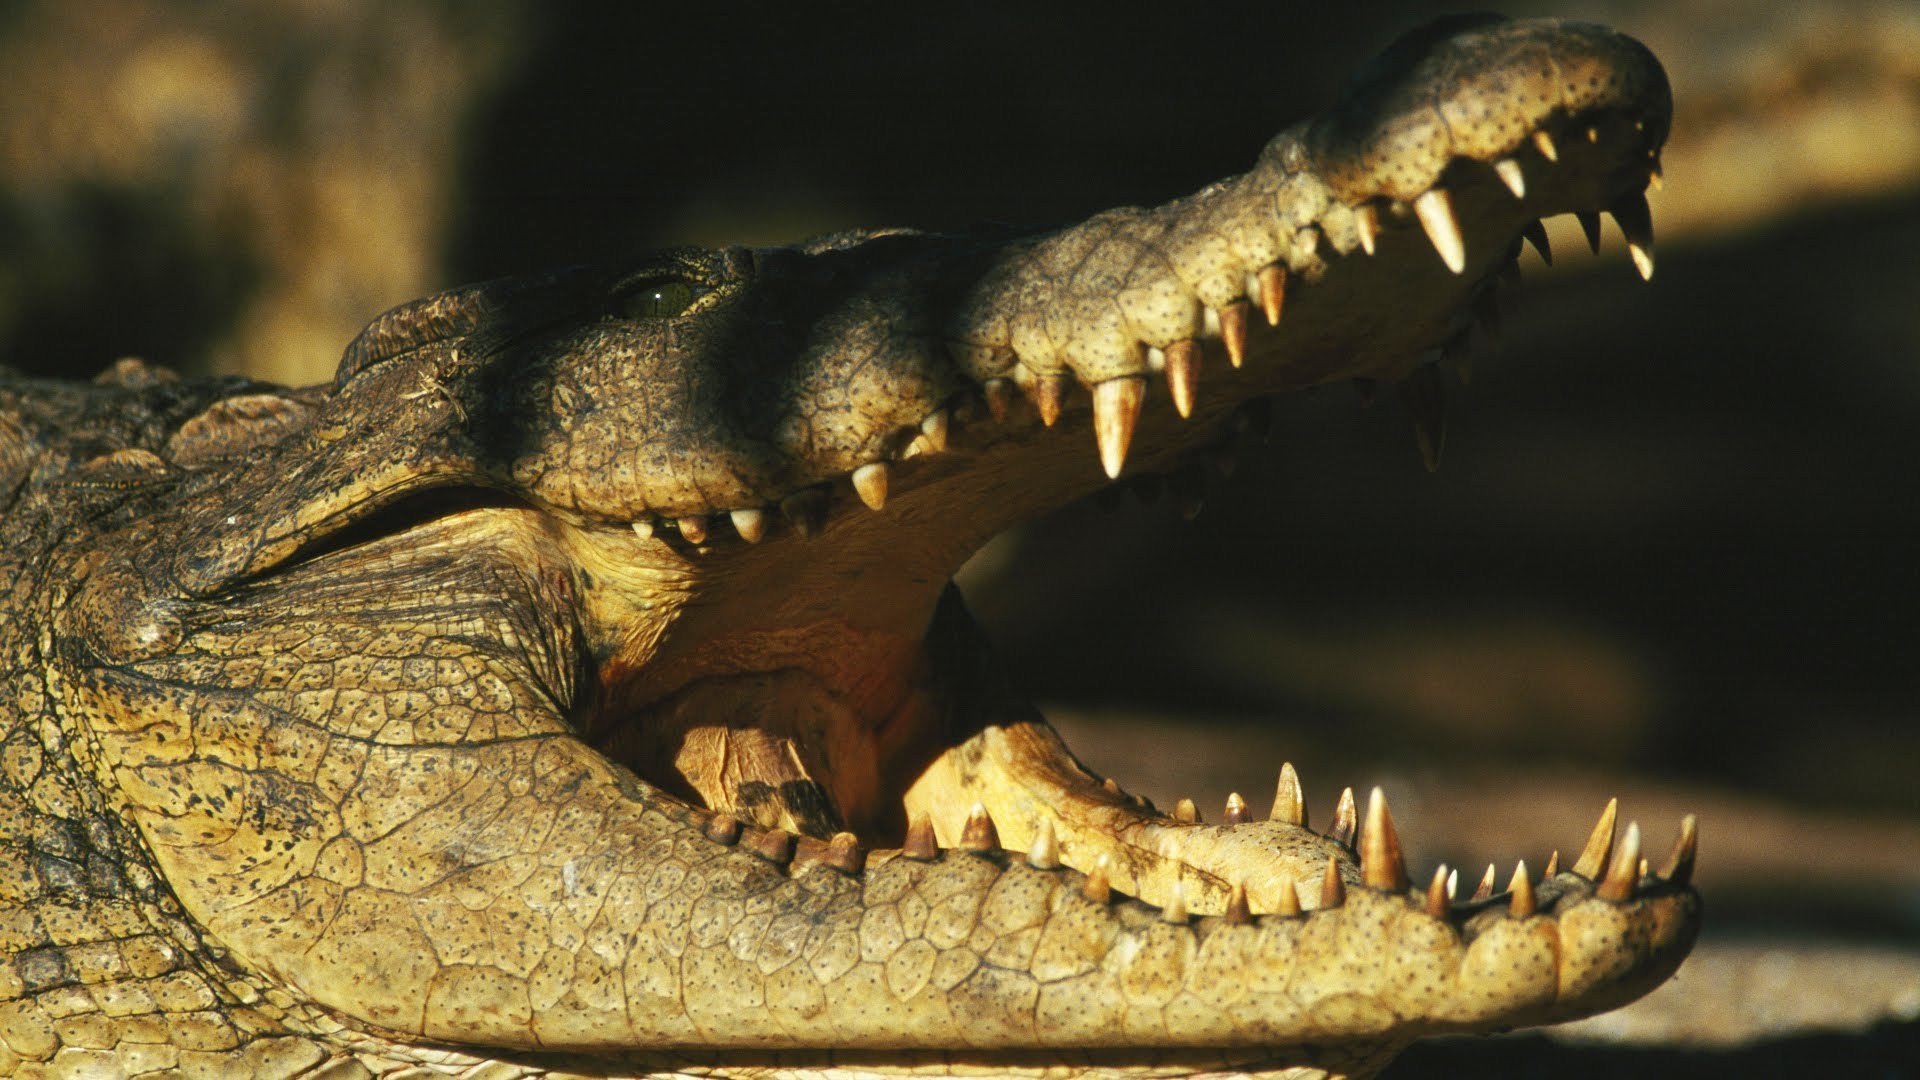 Про крокодила и птичку. Крокодил и птичка Тари. Крокодил и птичка Тари чистит зубы крокодилу. Симбиоз крокодила и птицы Тари. Птичка Тари и крокодил в природе.